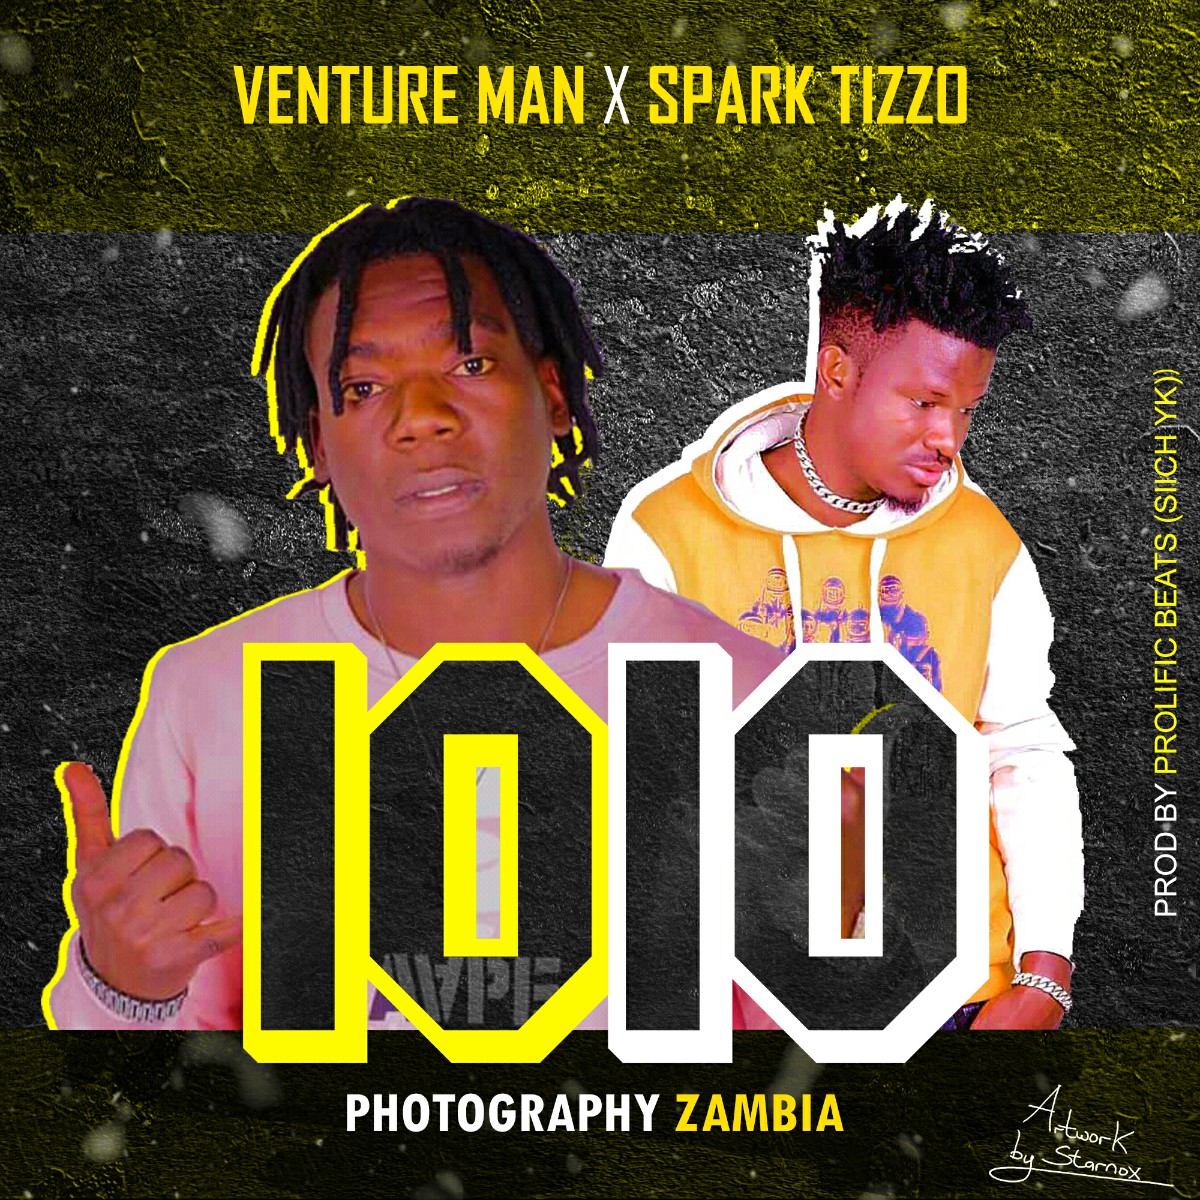 Venture Man X Spark Tizzo - 1010 Photography Zambia